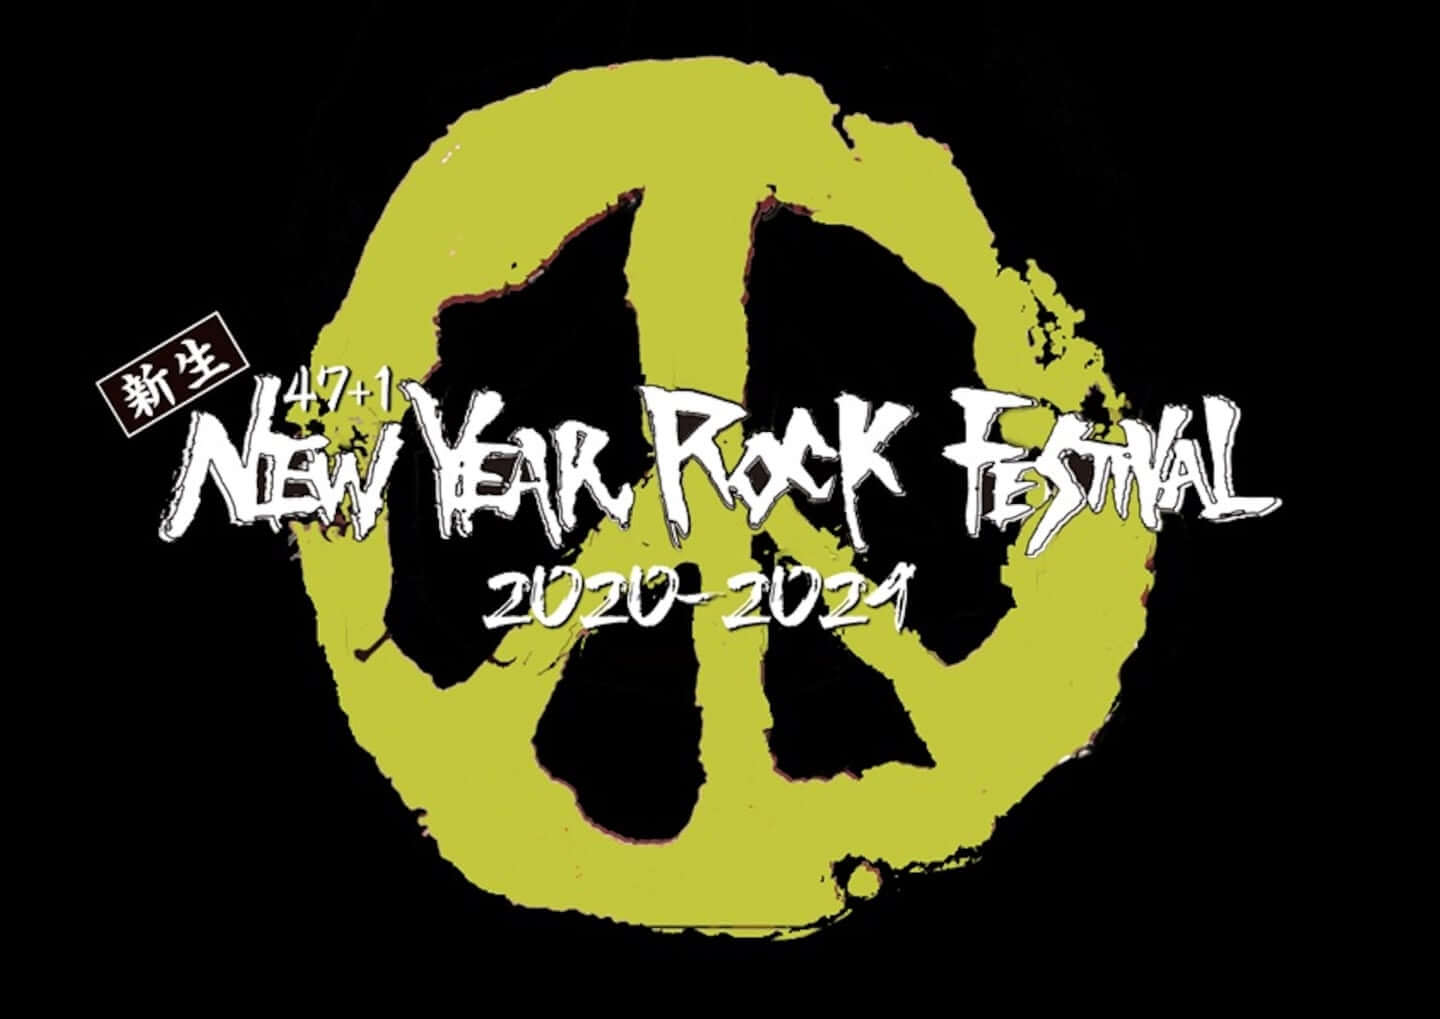 New Year Rock Festival